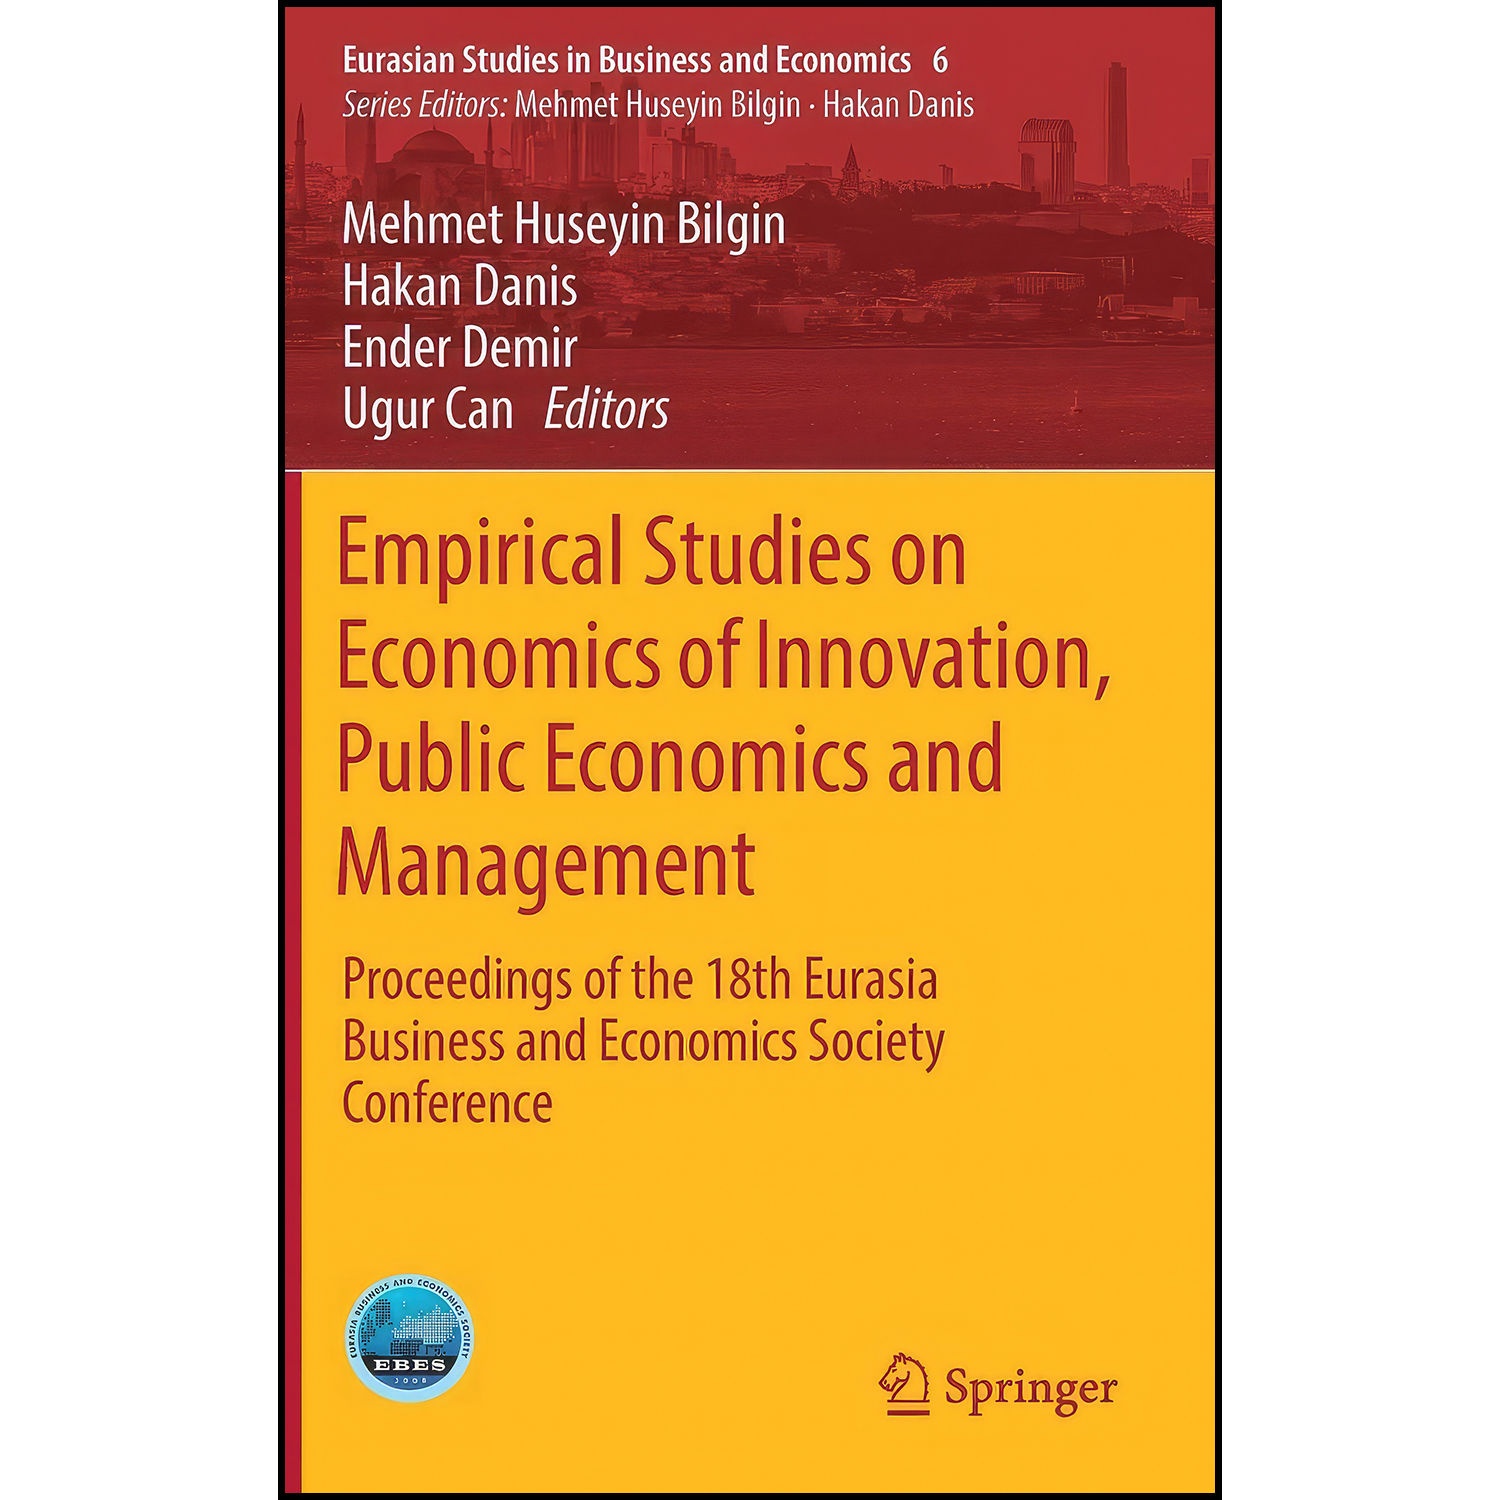 کتاب Empirical Studies on Economics of Innovation, Public Economics and Management اثر جمعي از نويسندگان انتشارات Springer